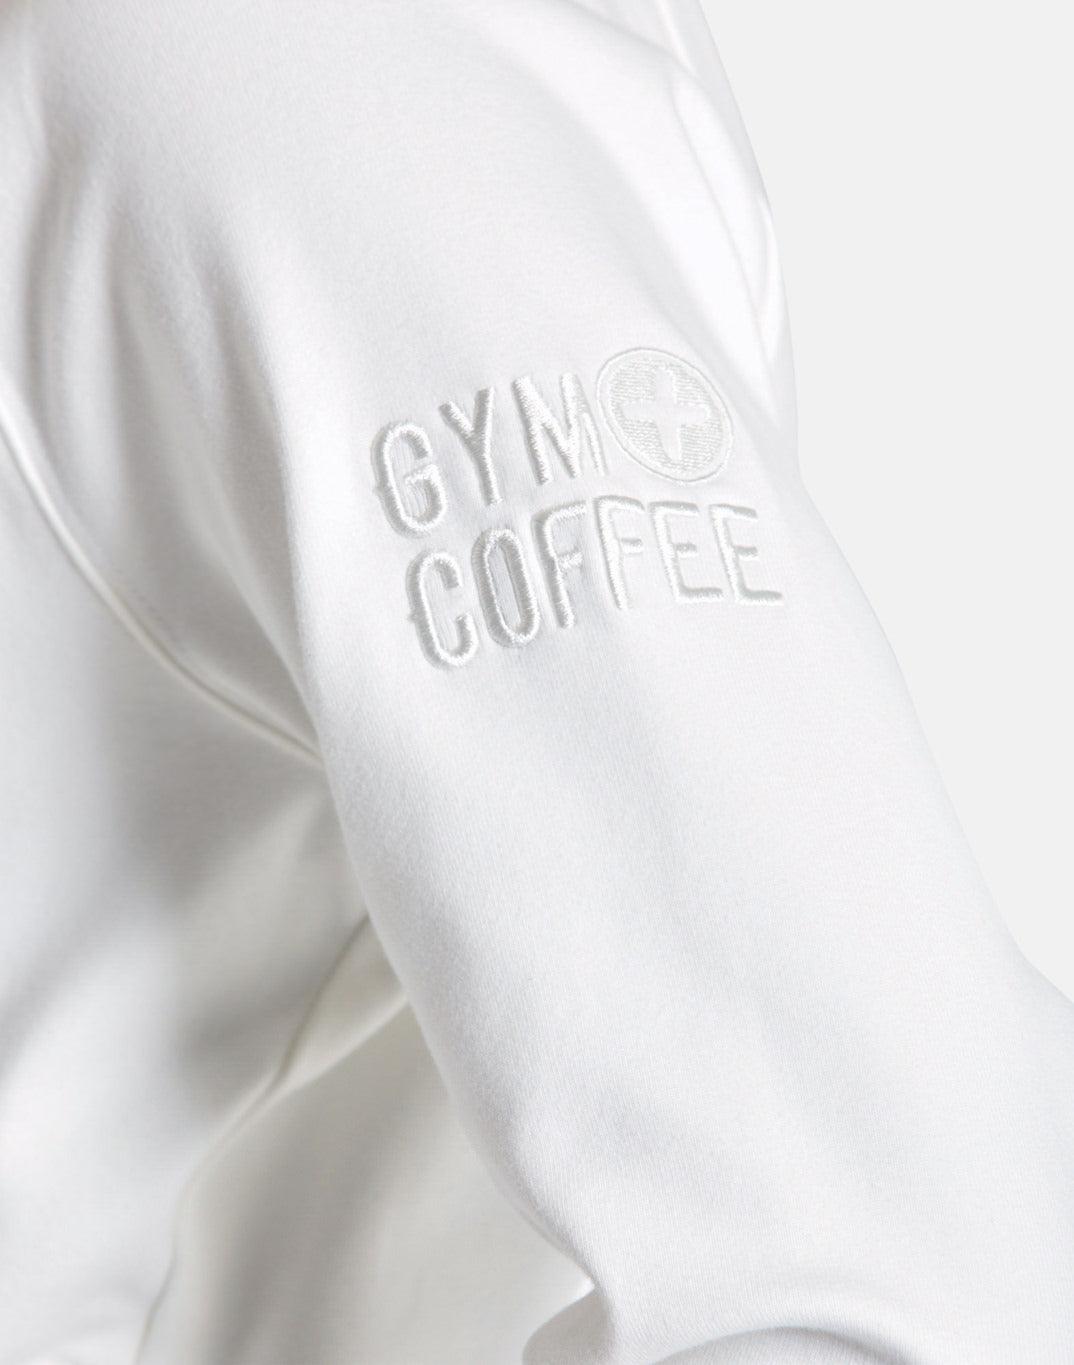 Essential Crew in Ivory White - Sweatshirts - Gym+Coffee